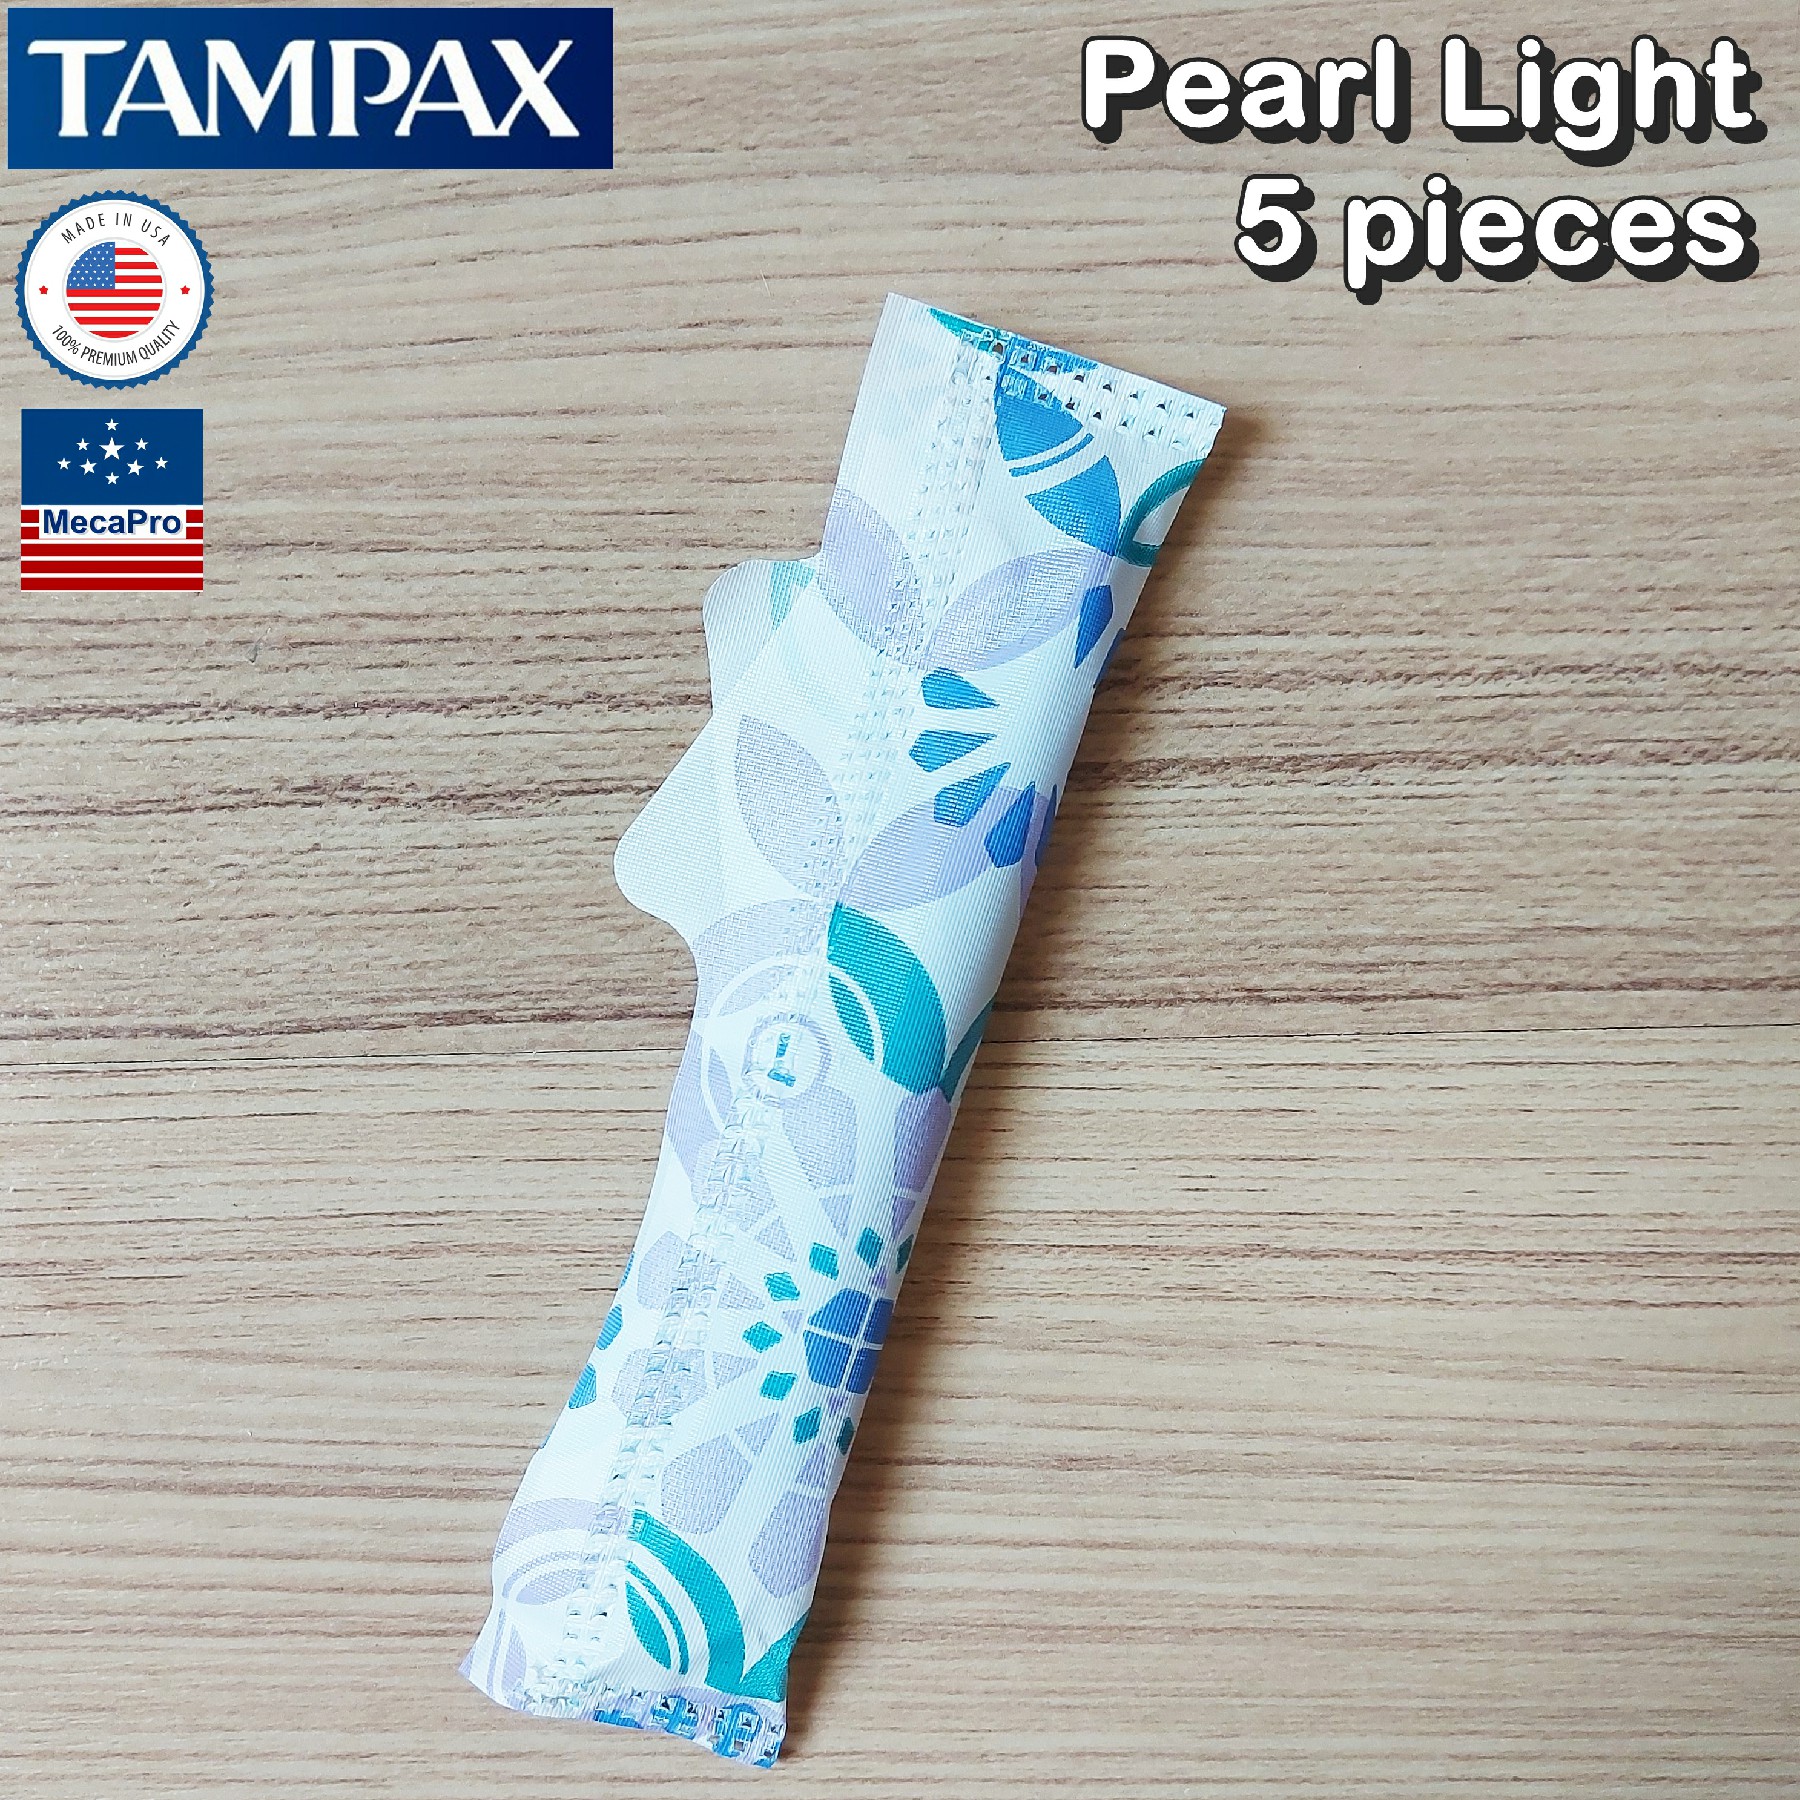 Tampax® Pearl Light Plastic Tampons Unscented 5 pieces ผ้าอนามัยแบบสอด 5 ชิ้น เหมาะกับวันมาน้อย สูตรไร้กลิ่น